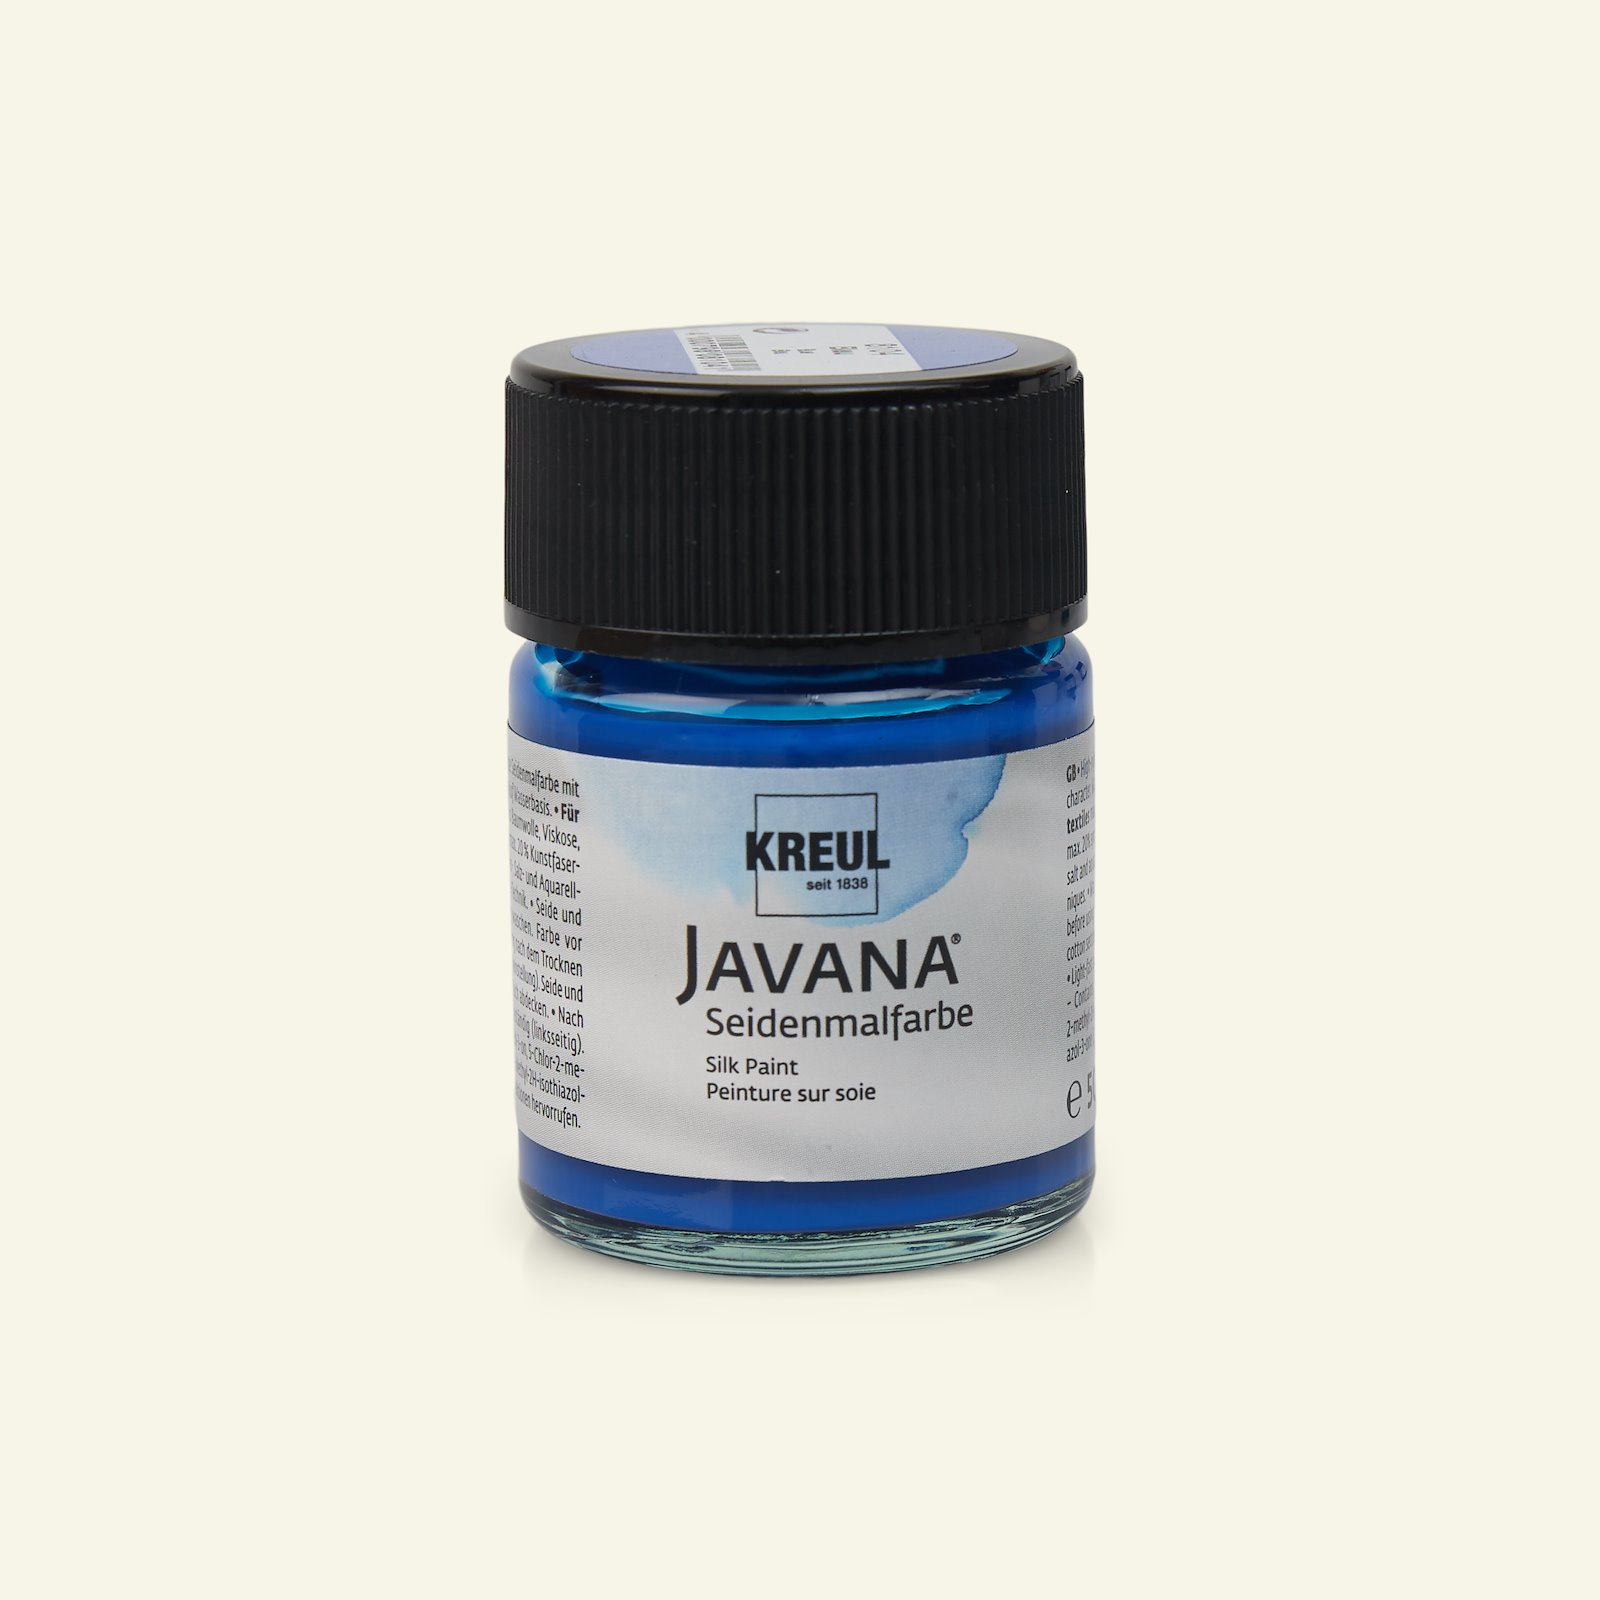 Javana sidenfärg, blå, 50ml 29641_pack_b